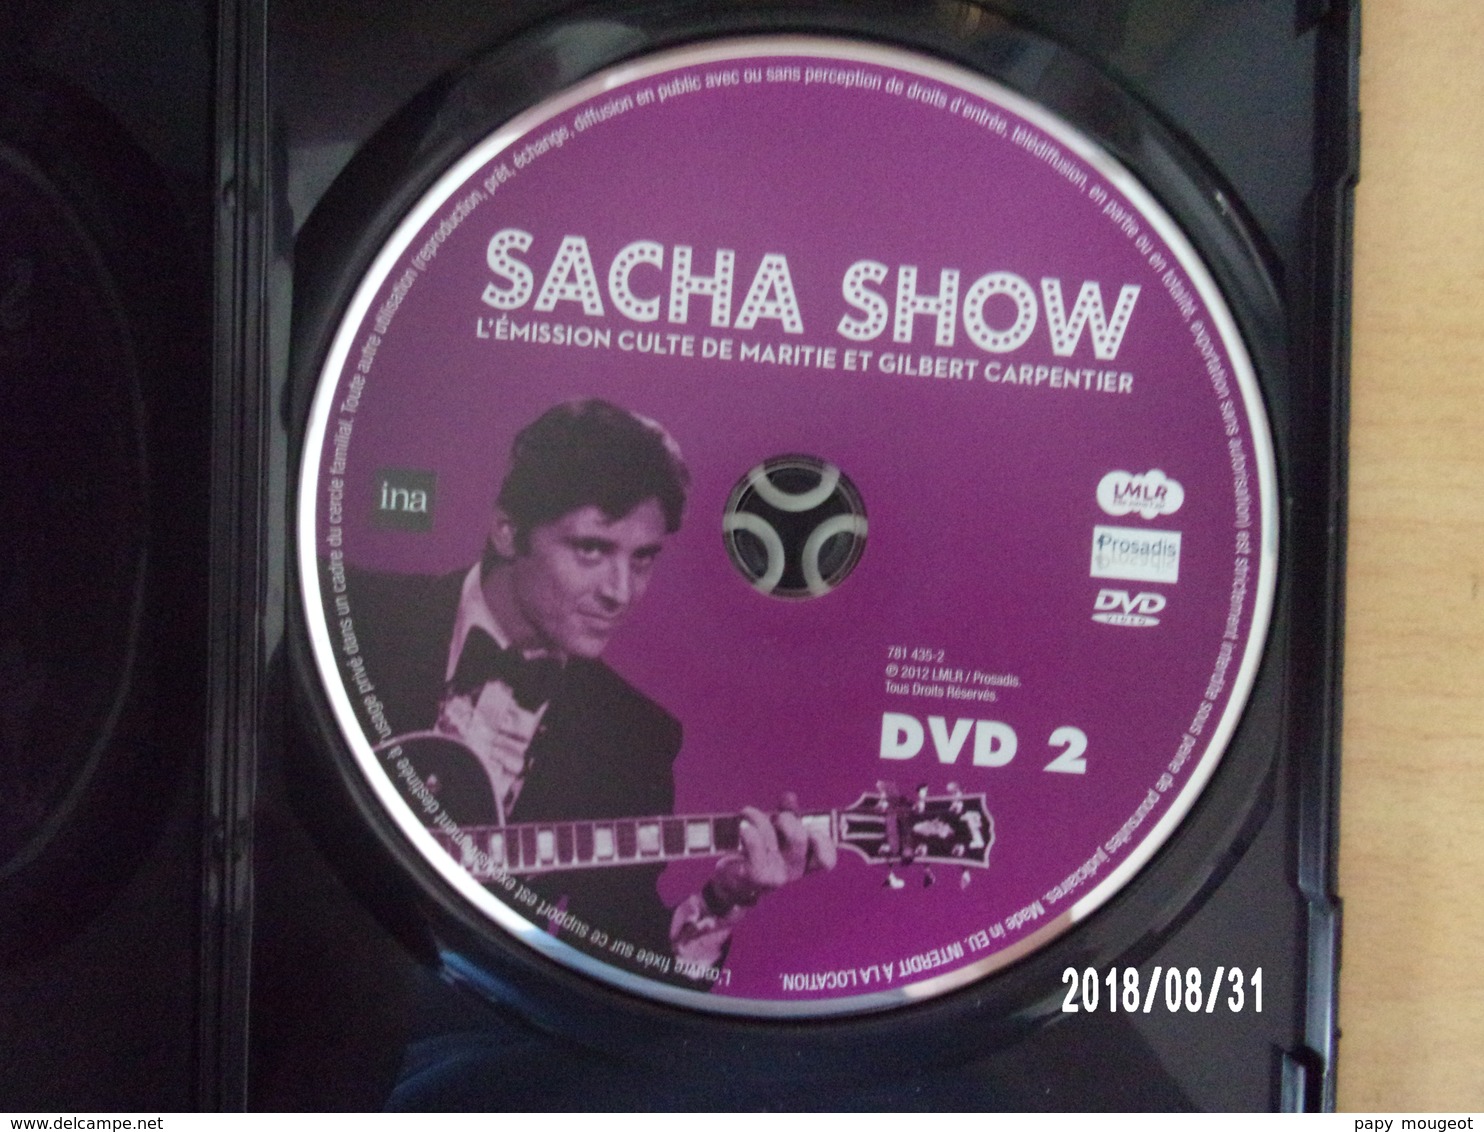 Sacha Show DVD 2 - Musik-DVD's